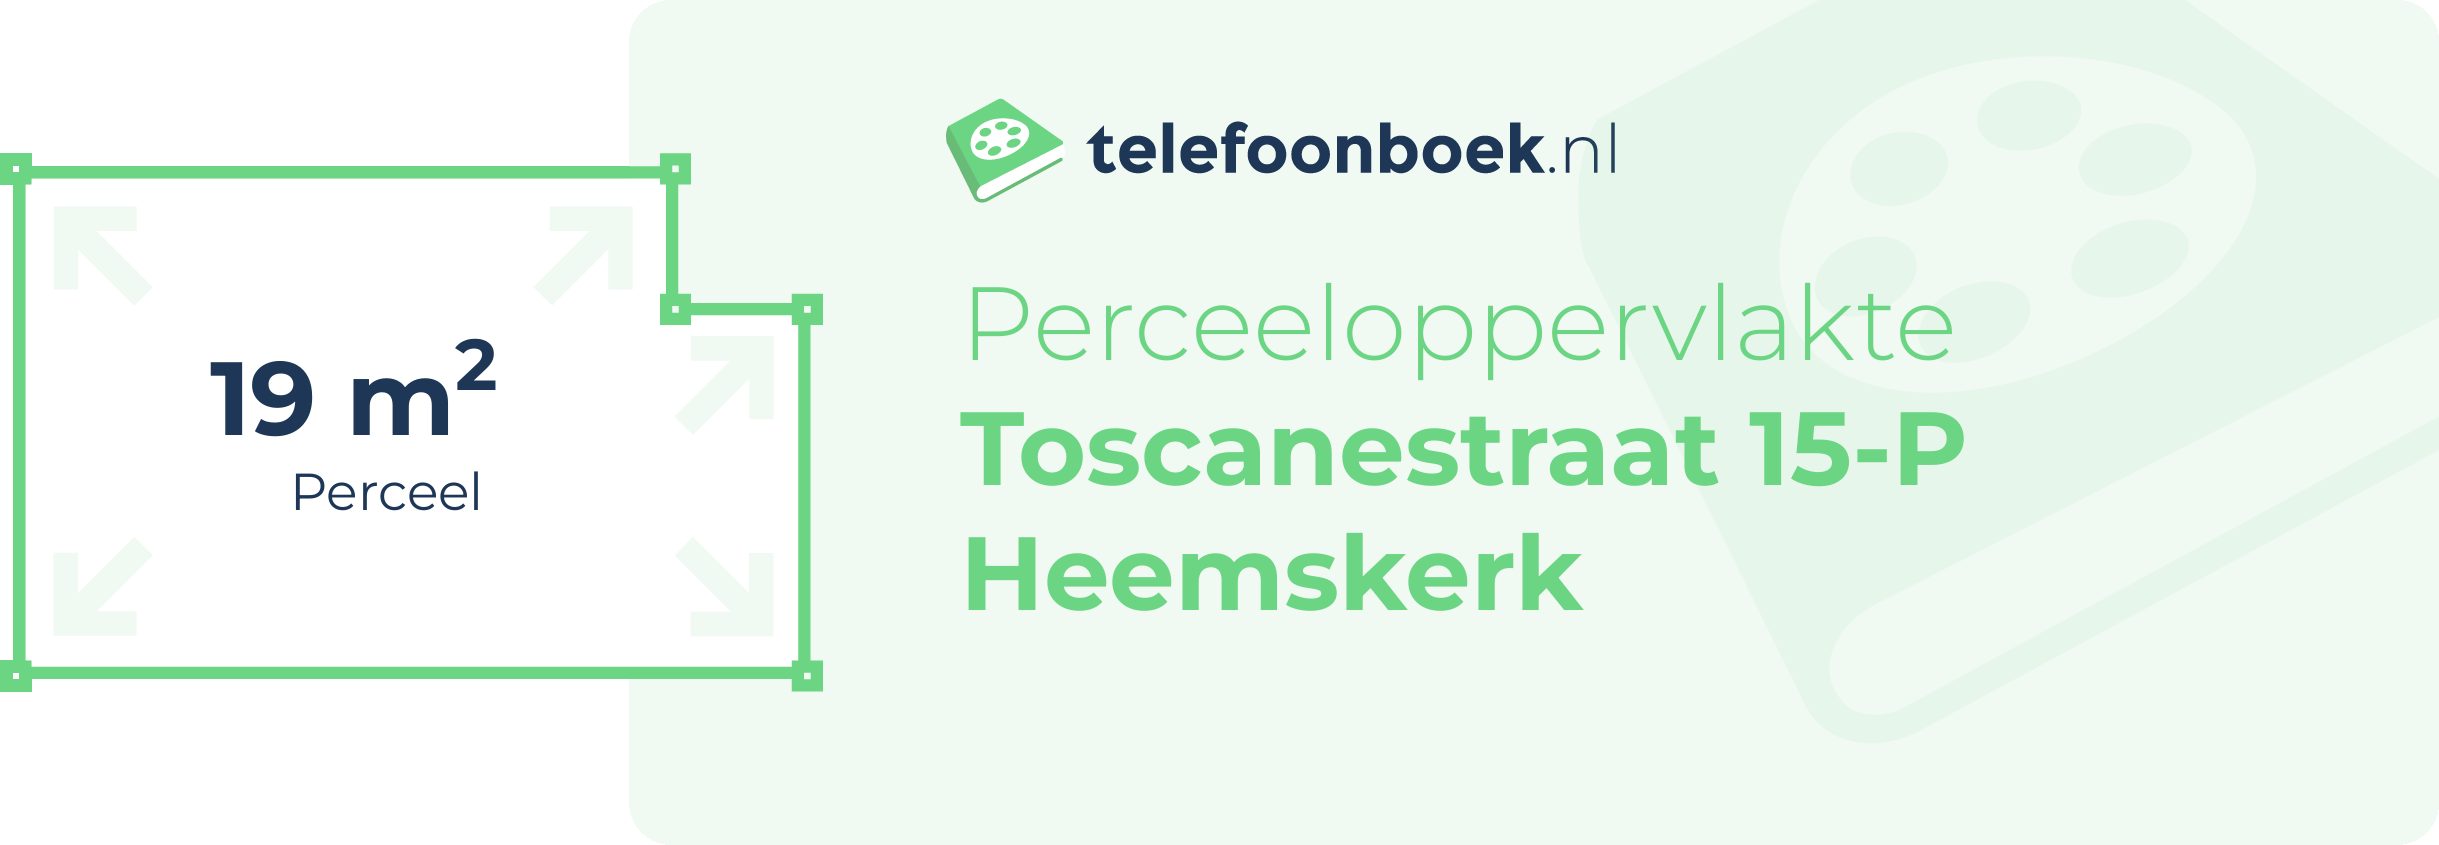 Perceeloppervlakte Toscanestraat 15-P Heemskerk